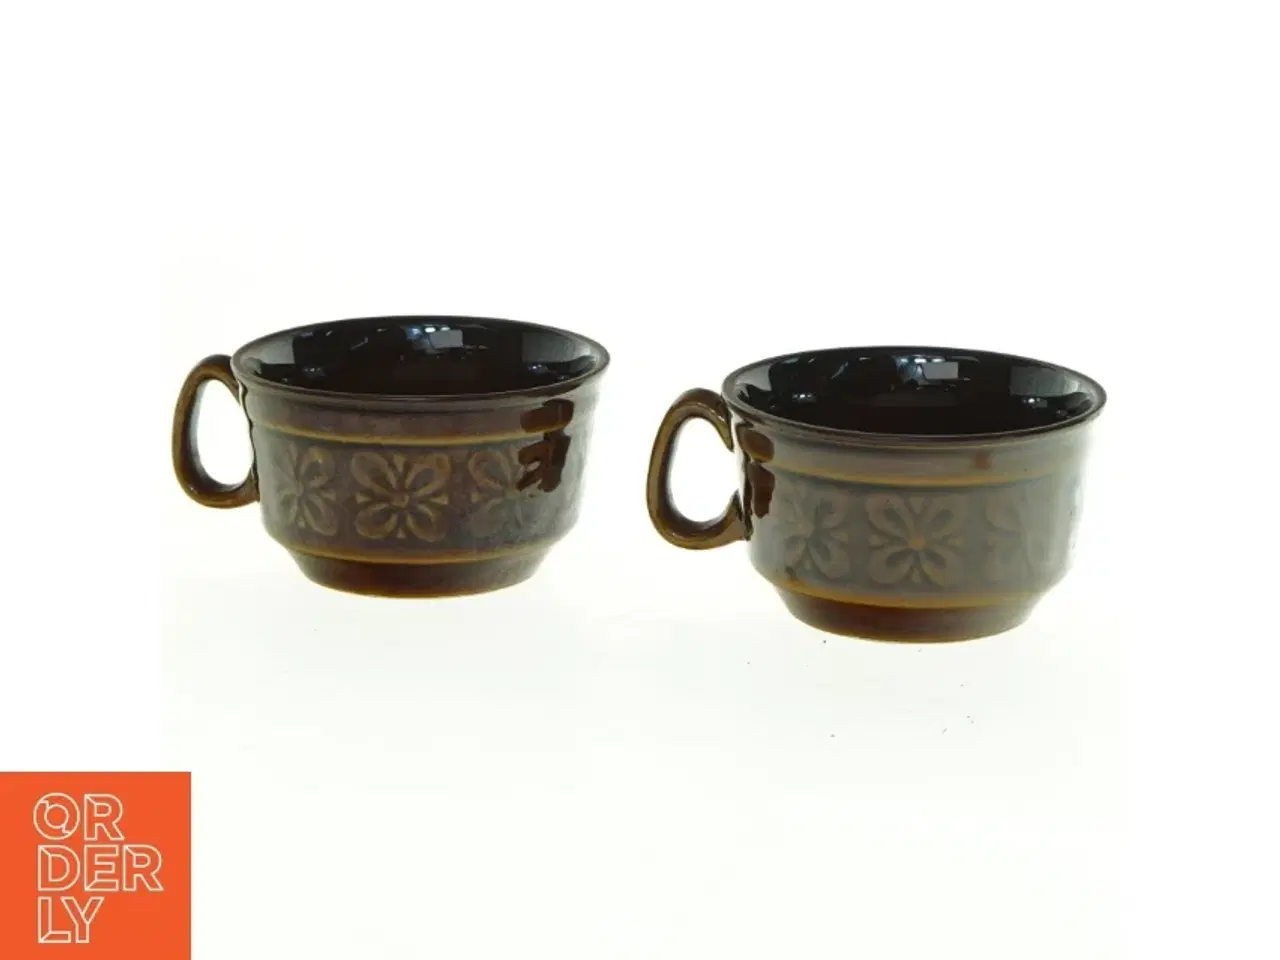 Billede 1 - Brune keramik krus med blomstermotiv (str. 12 x 10 x 6 cm)